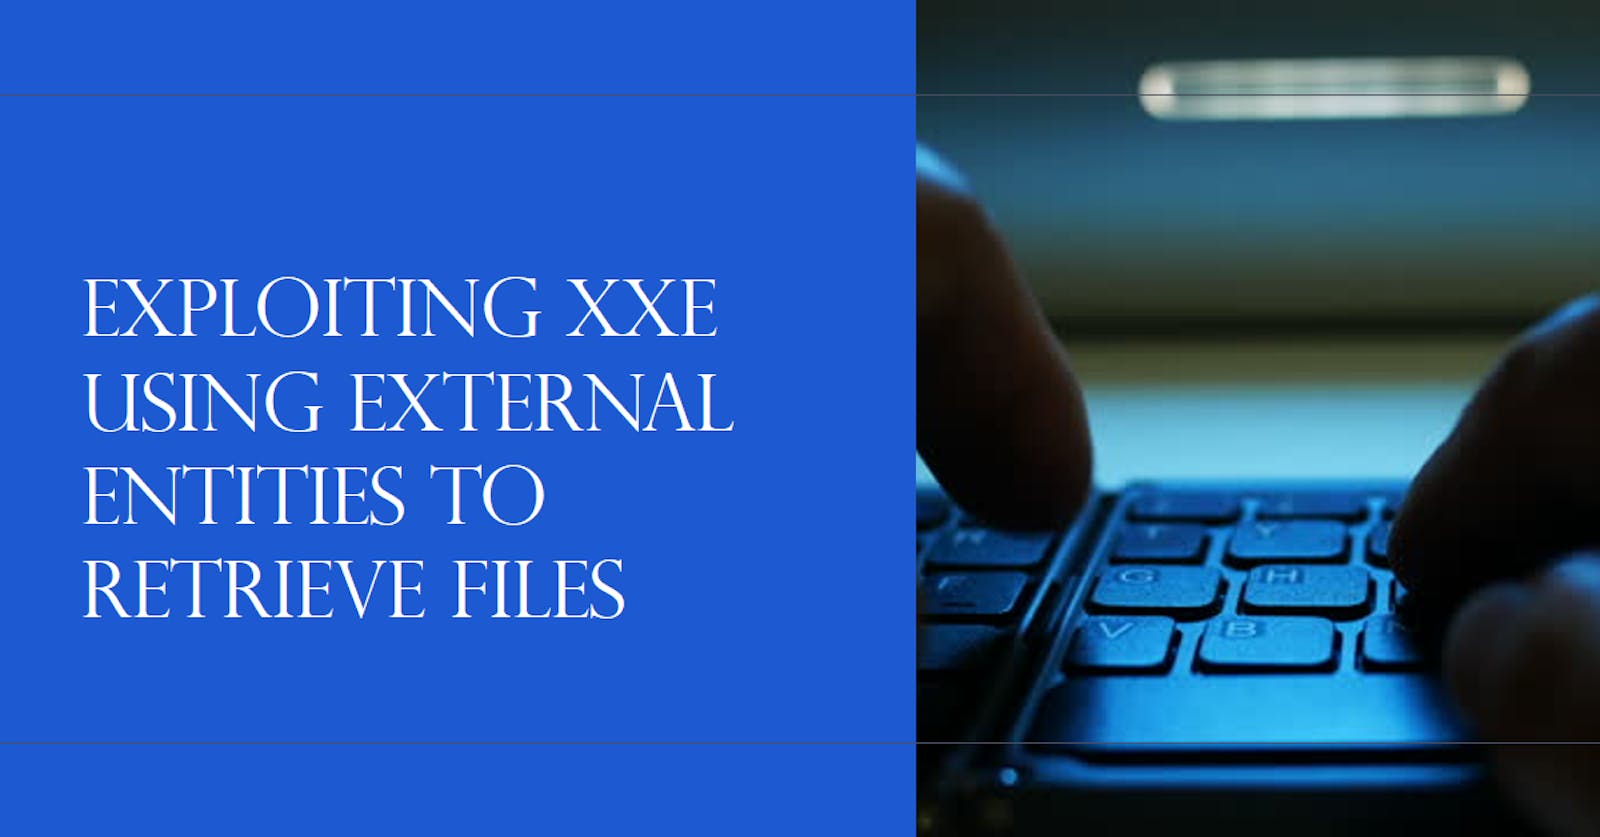 Lab: Exploiting XXE using external entities to retrieve files